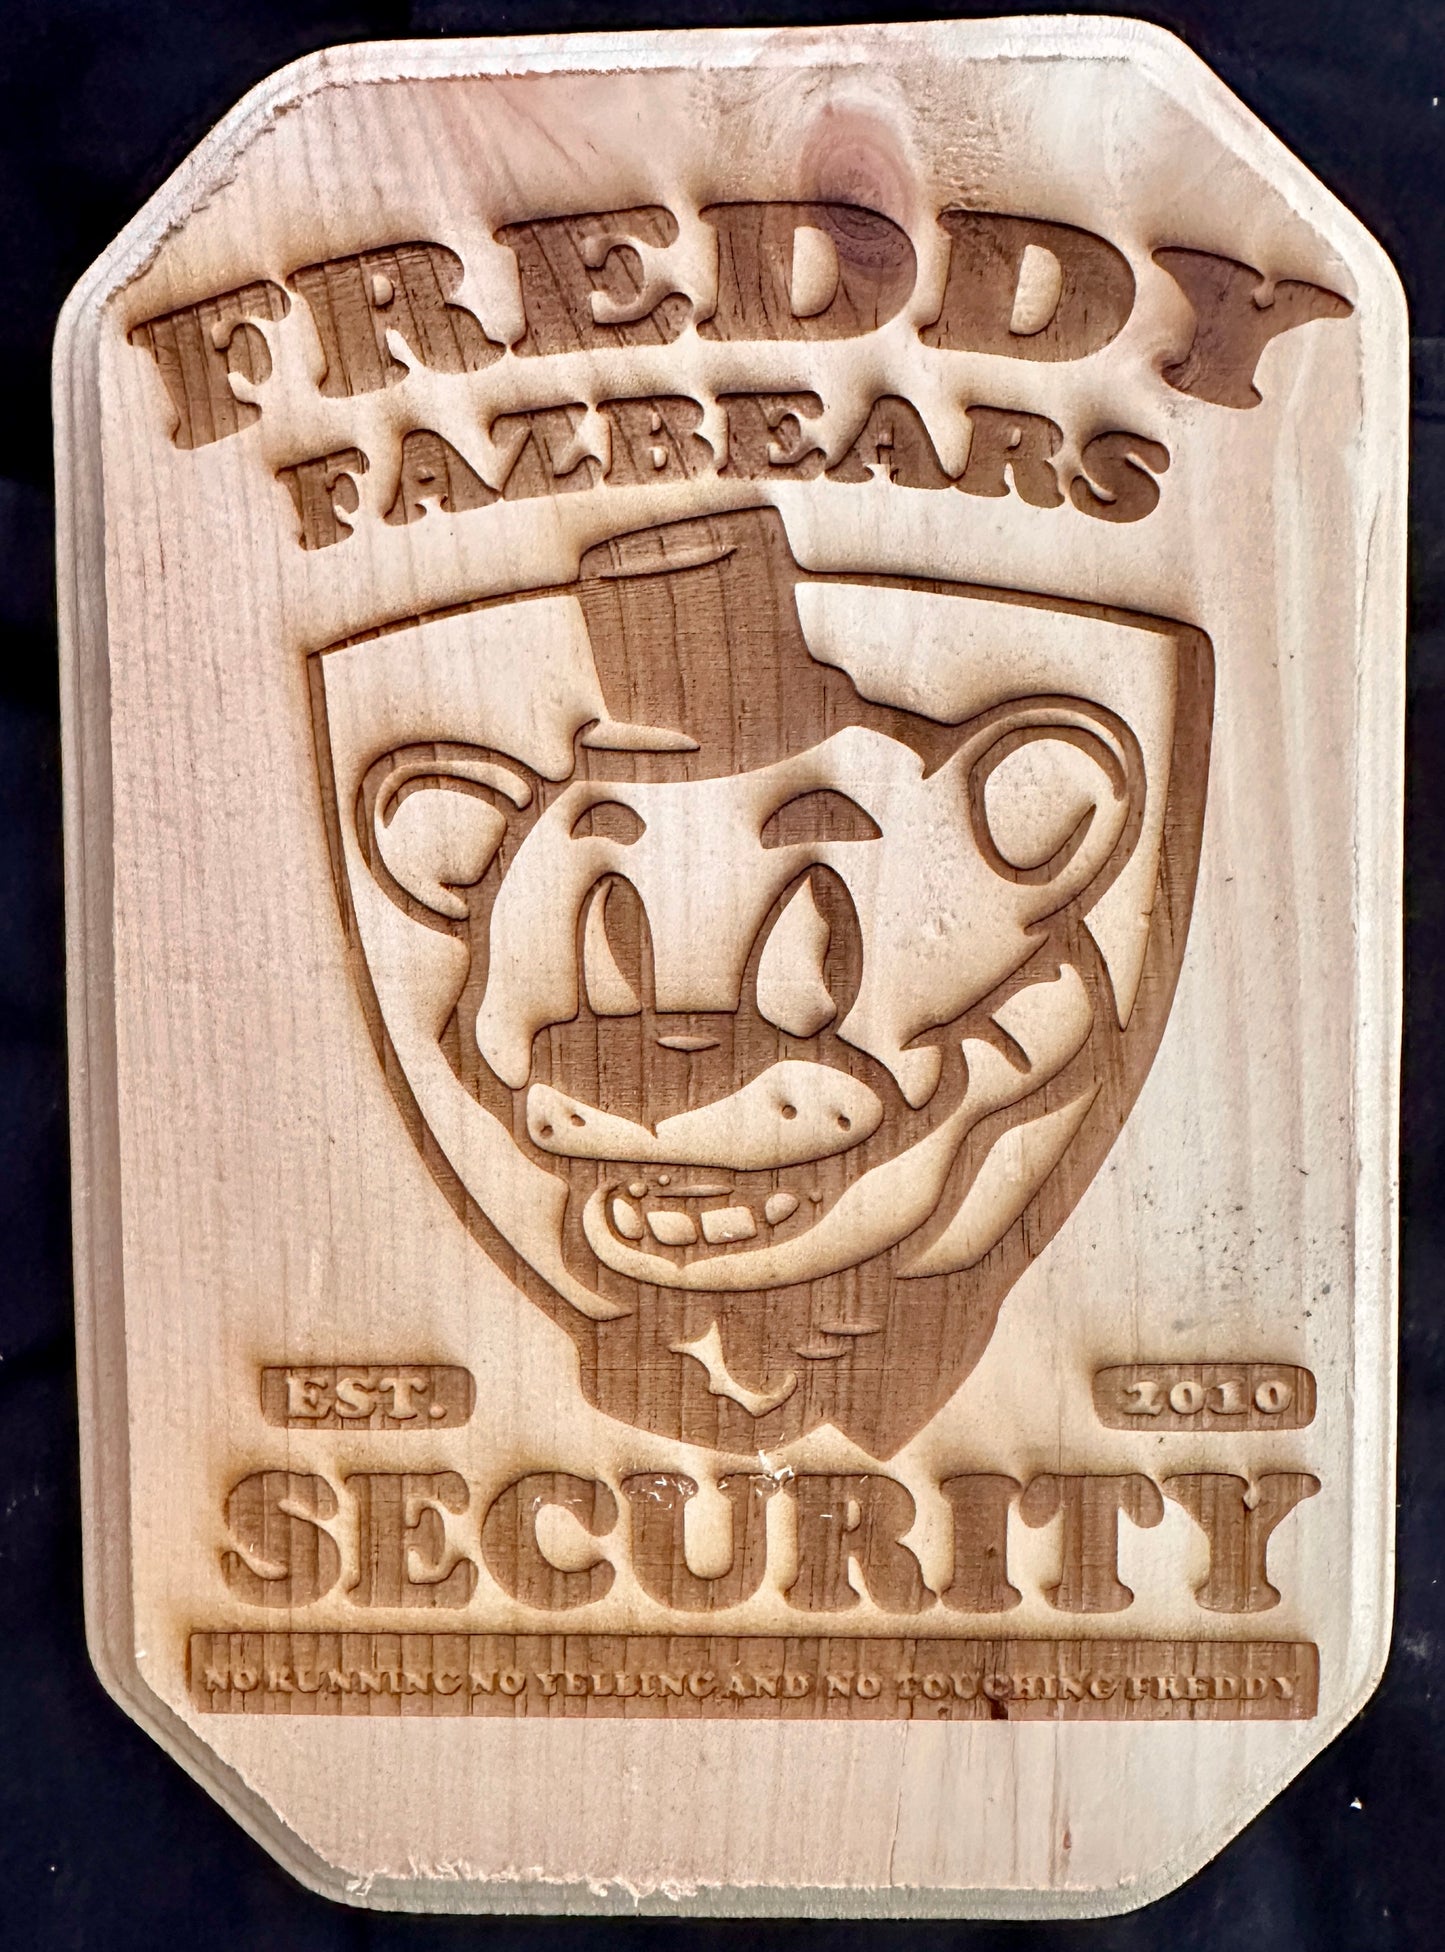 Freddy Fazbear Security Plaque